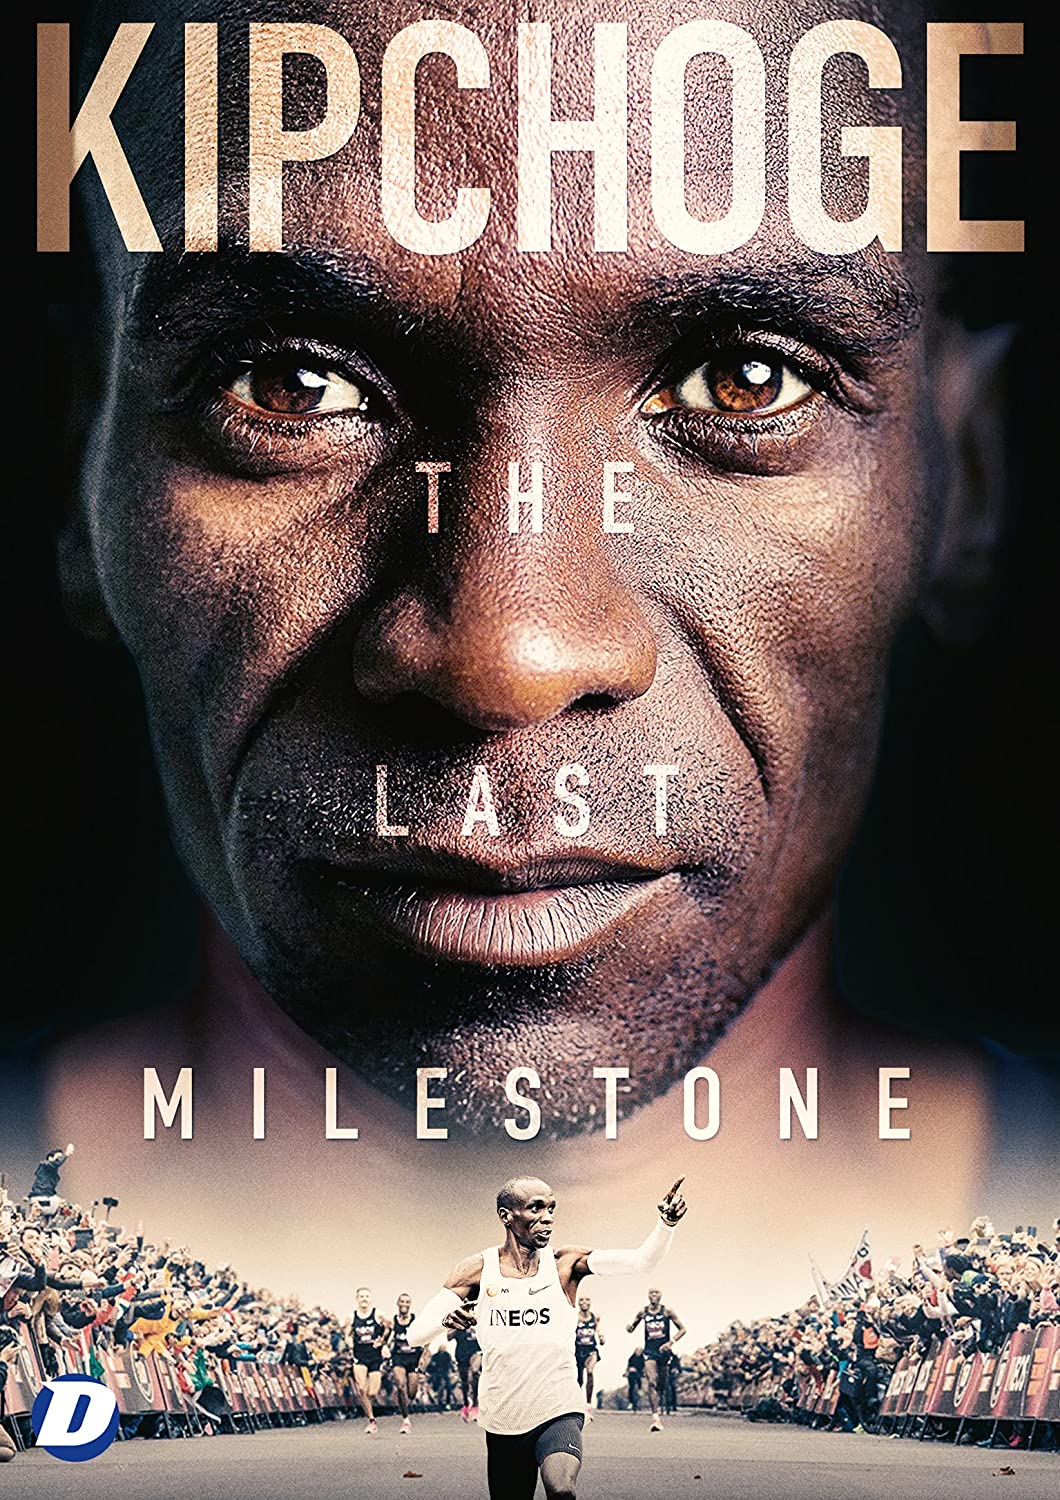 Kipchoge: The Last Milestone [2021] [DVD]